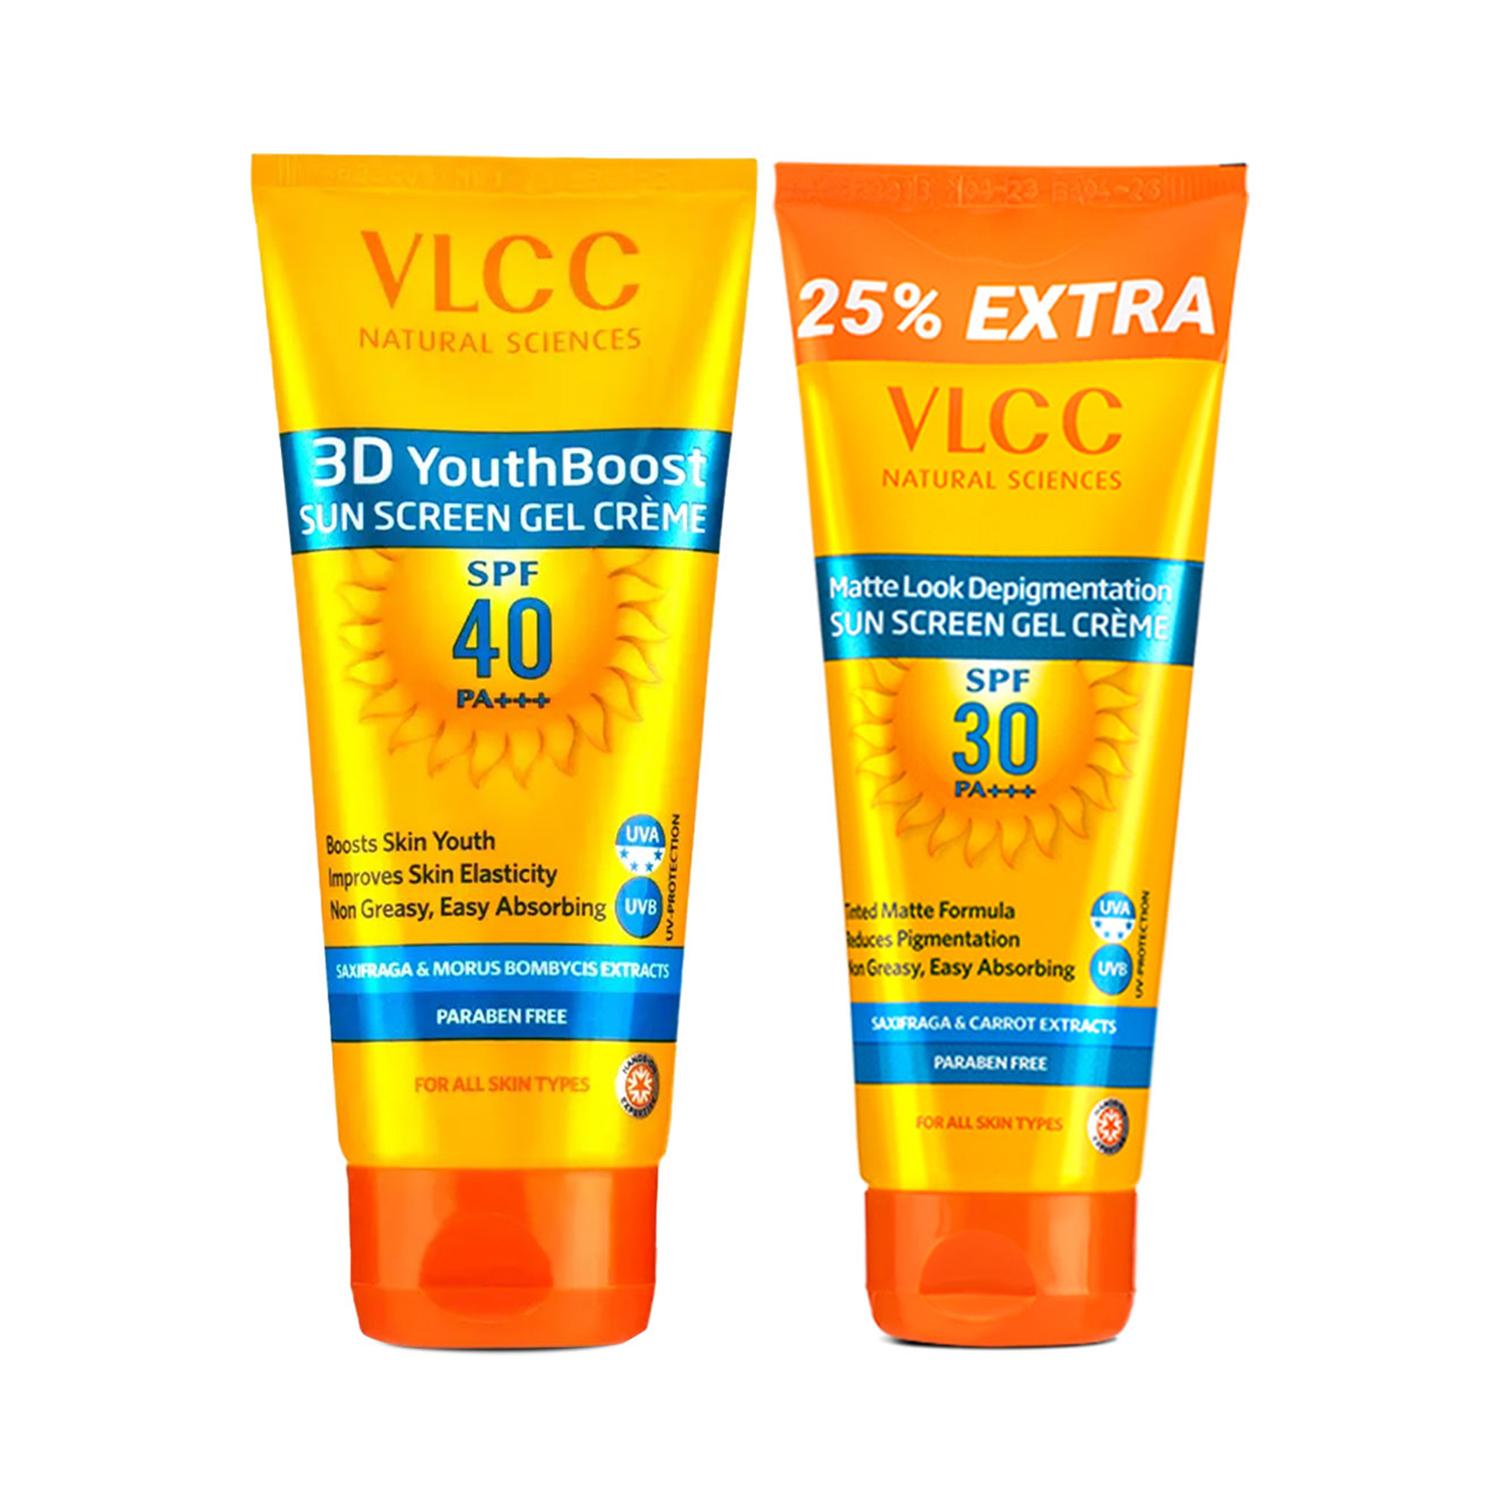 VLCC Water Resistant Sunscreen Gel Creme SPF 60 PA+++ & Matte Look SPF 30 PA